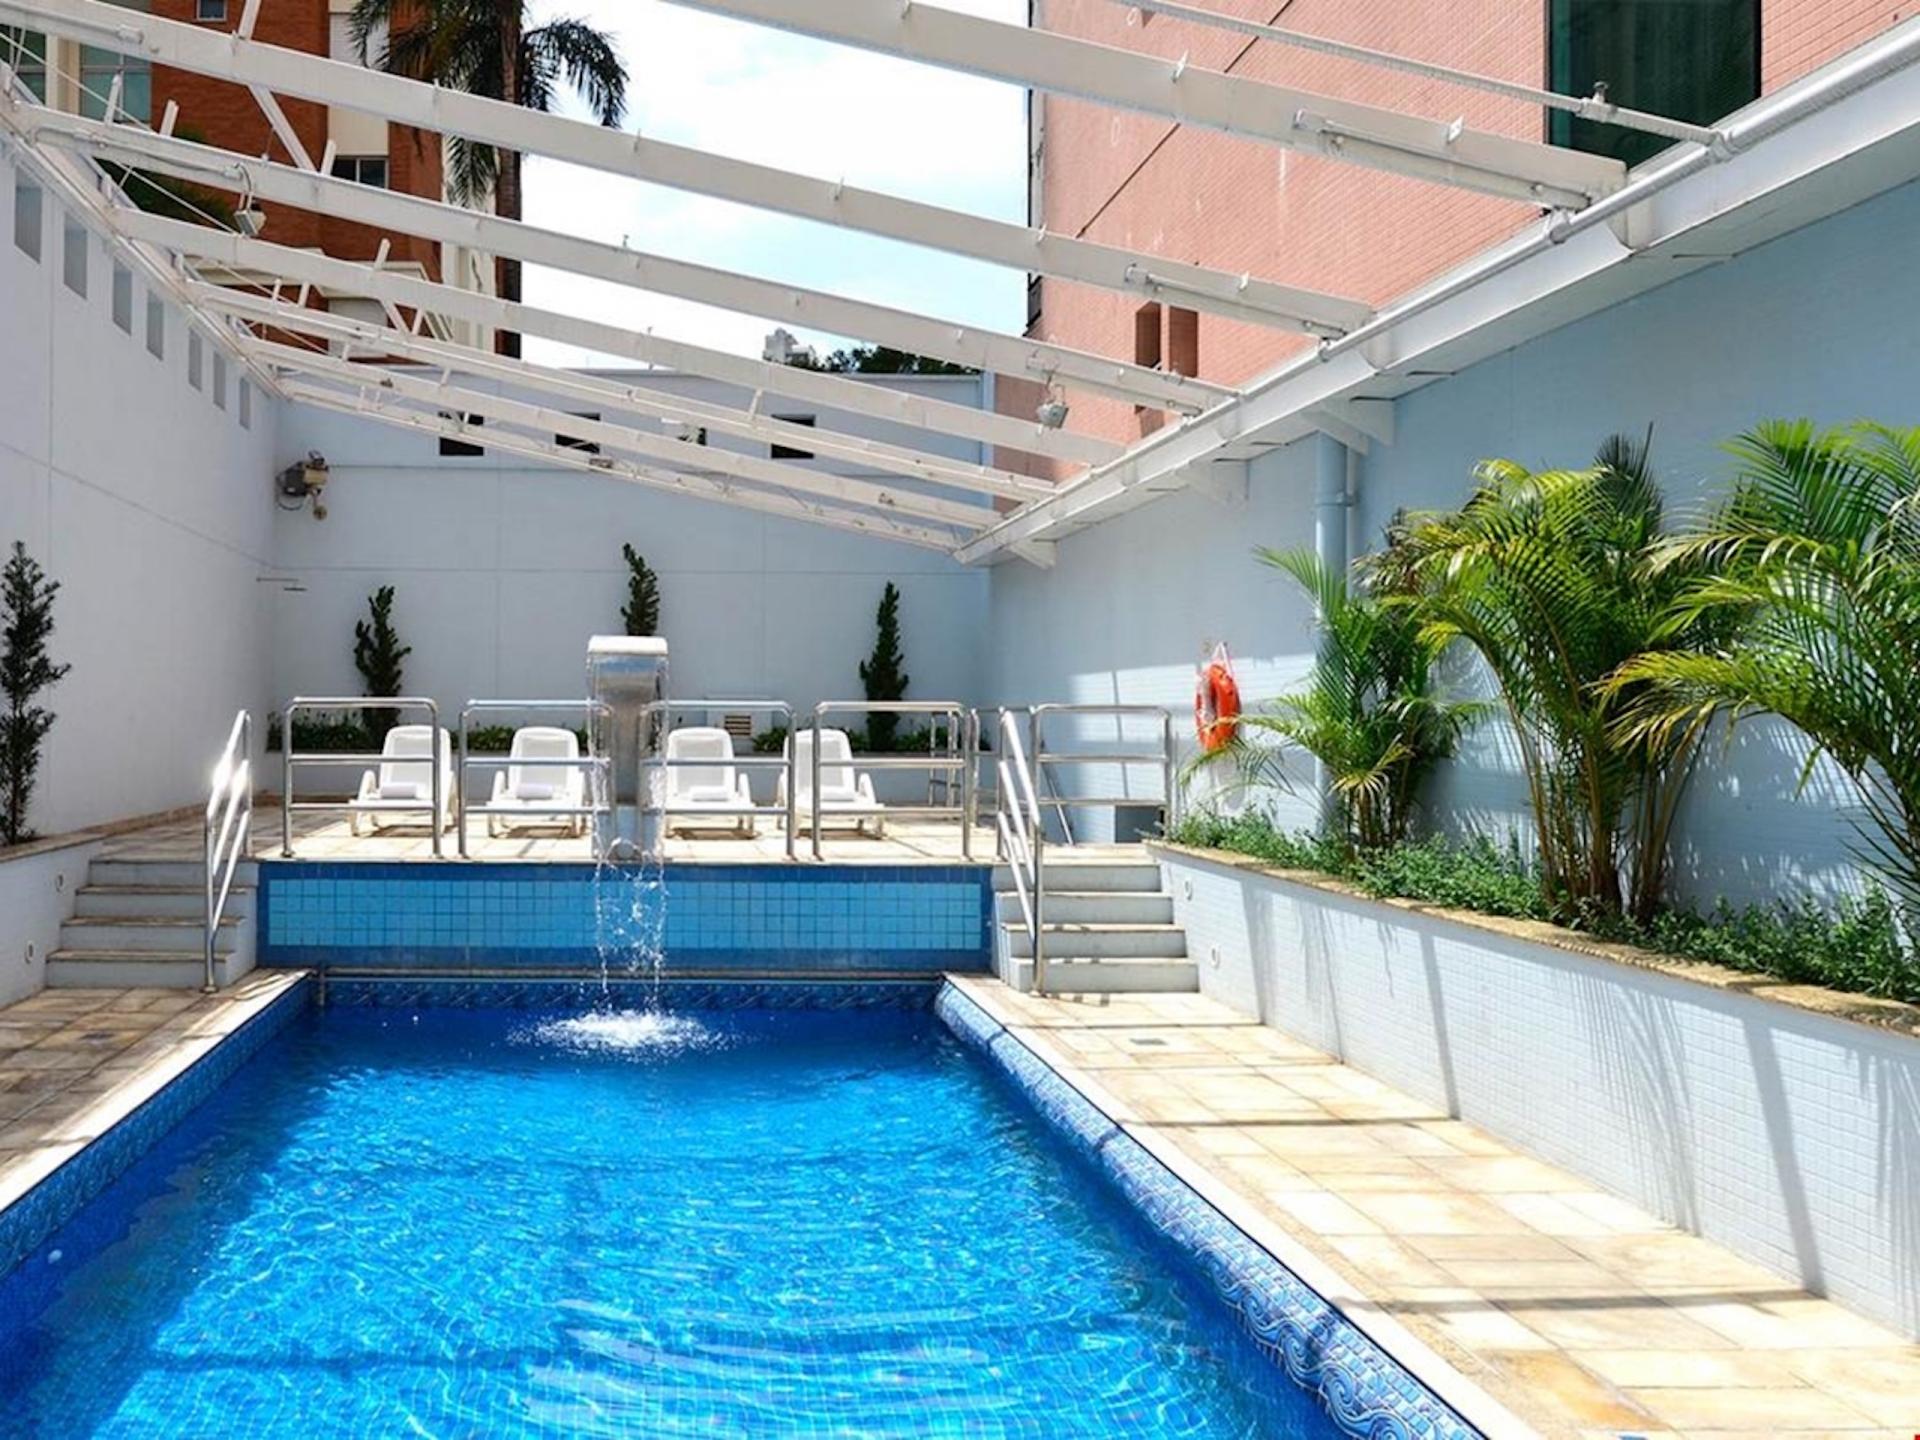 Pool des Hotel Pestana in Sao Paulo, Brasilien